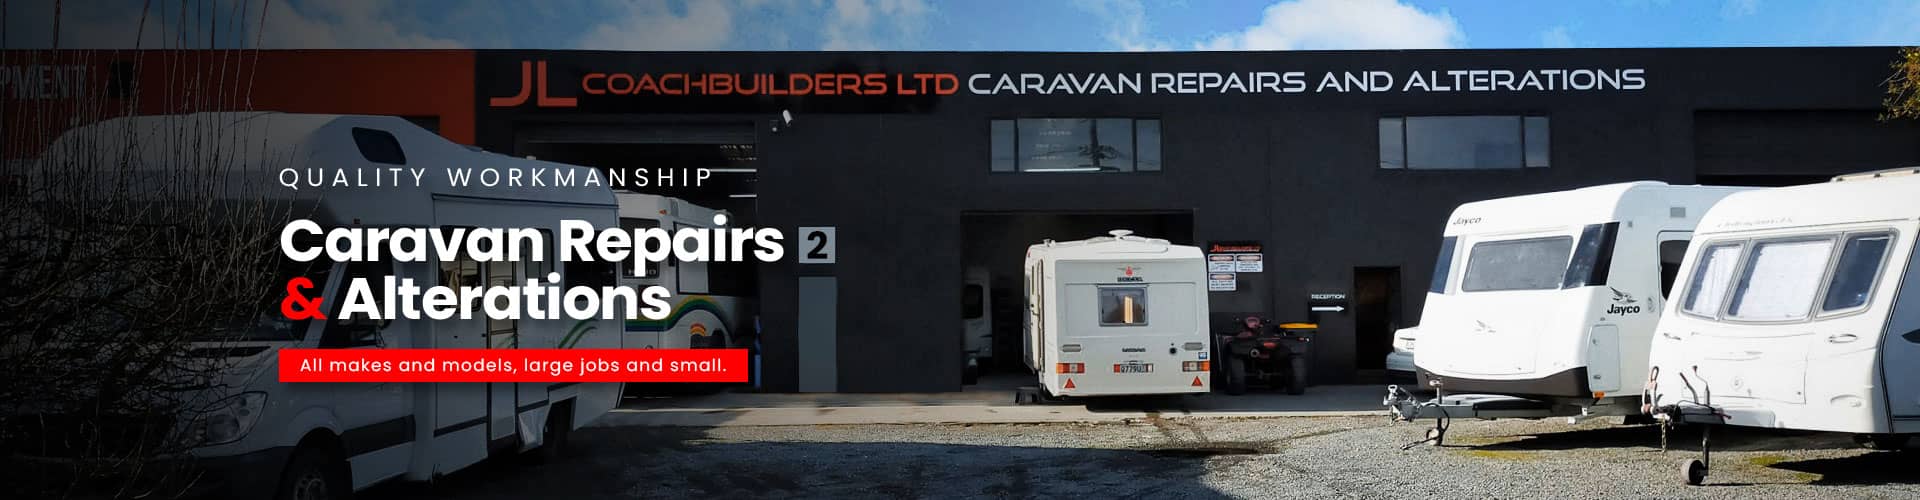 JL Coach Builders: Trusted Caravans and Motorhomes Repair Specialists in Christchurch